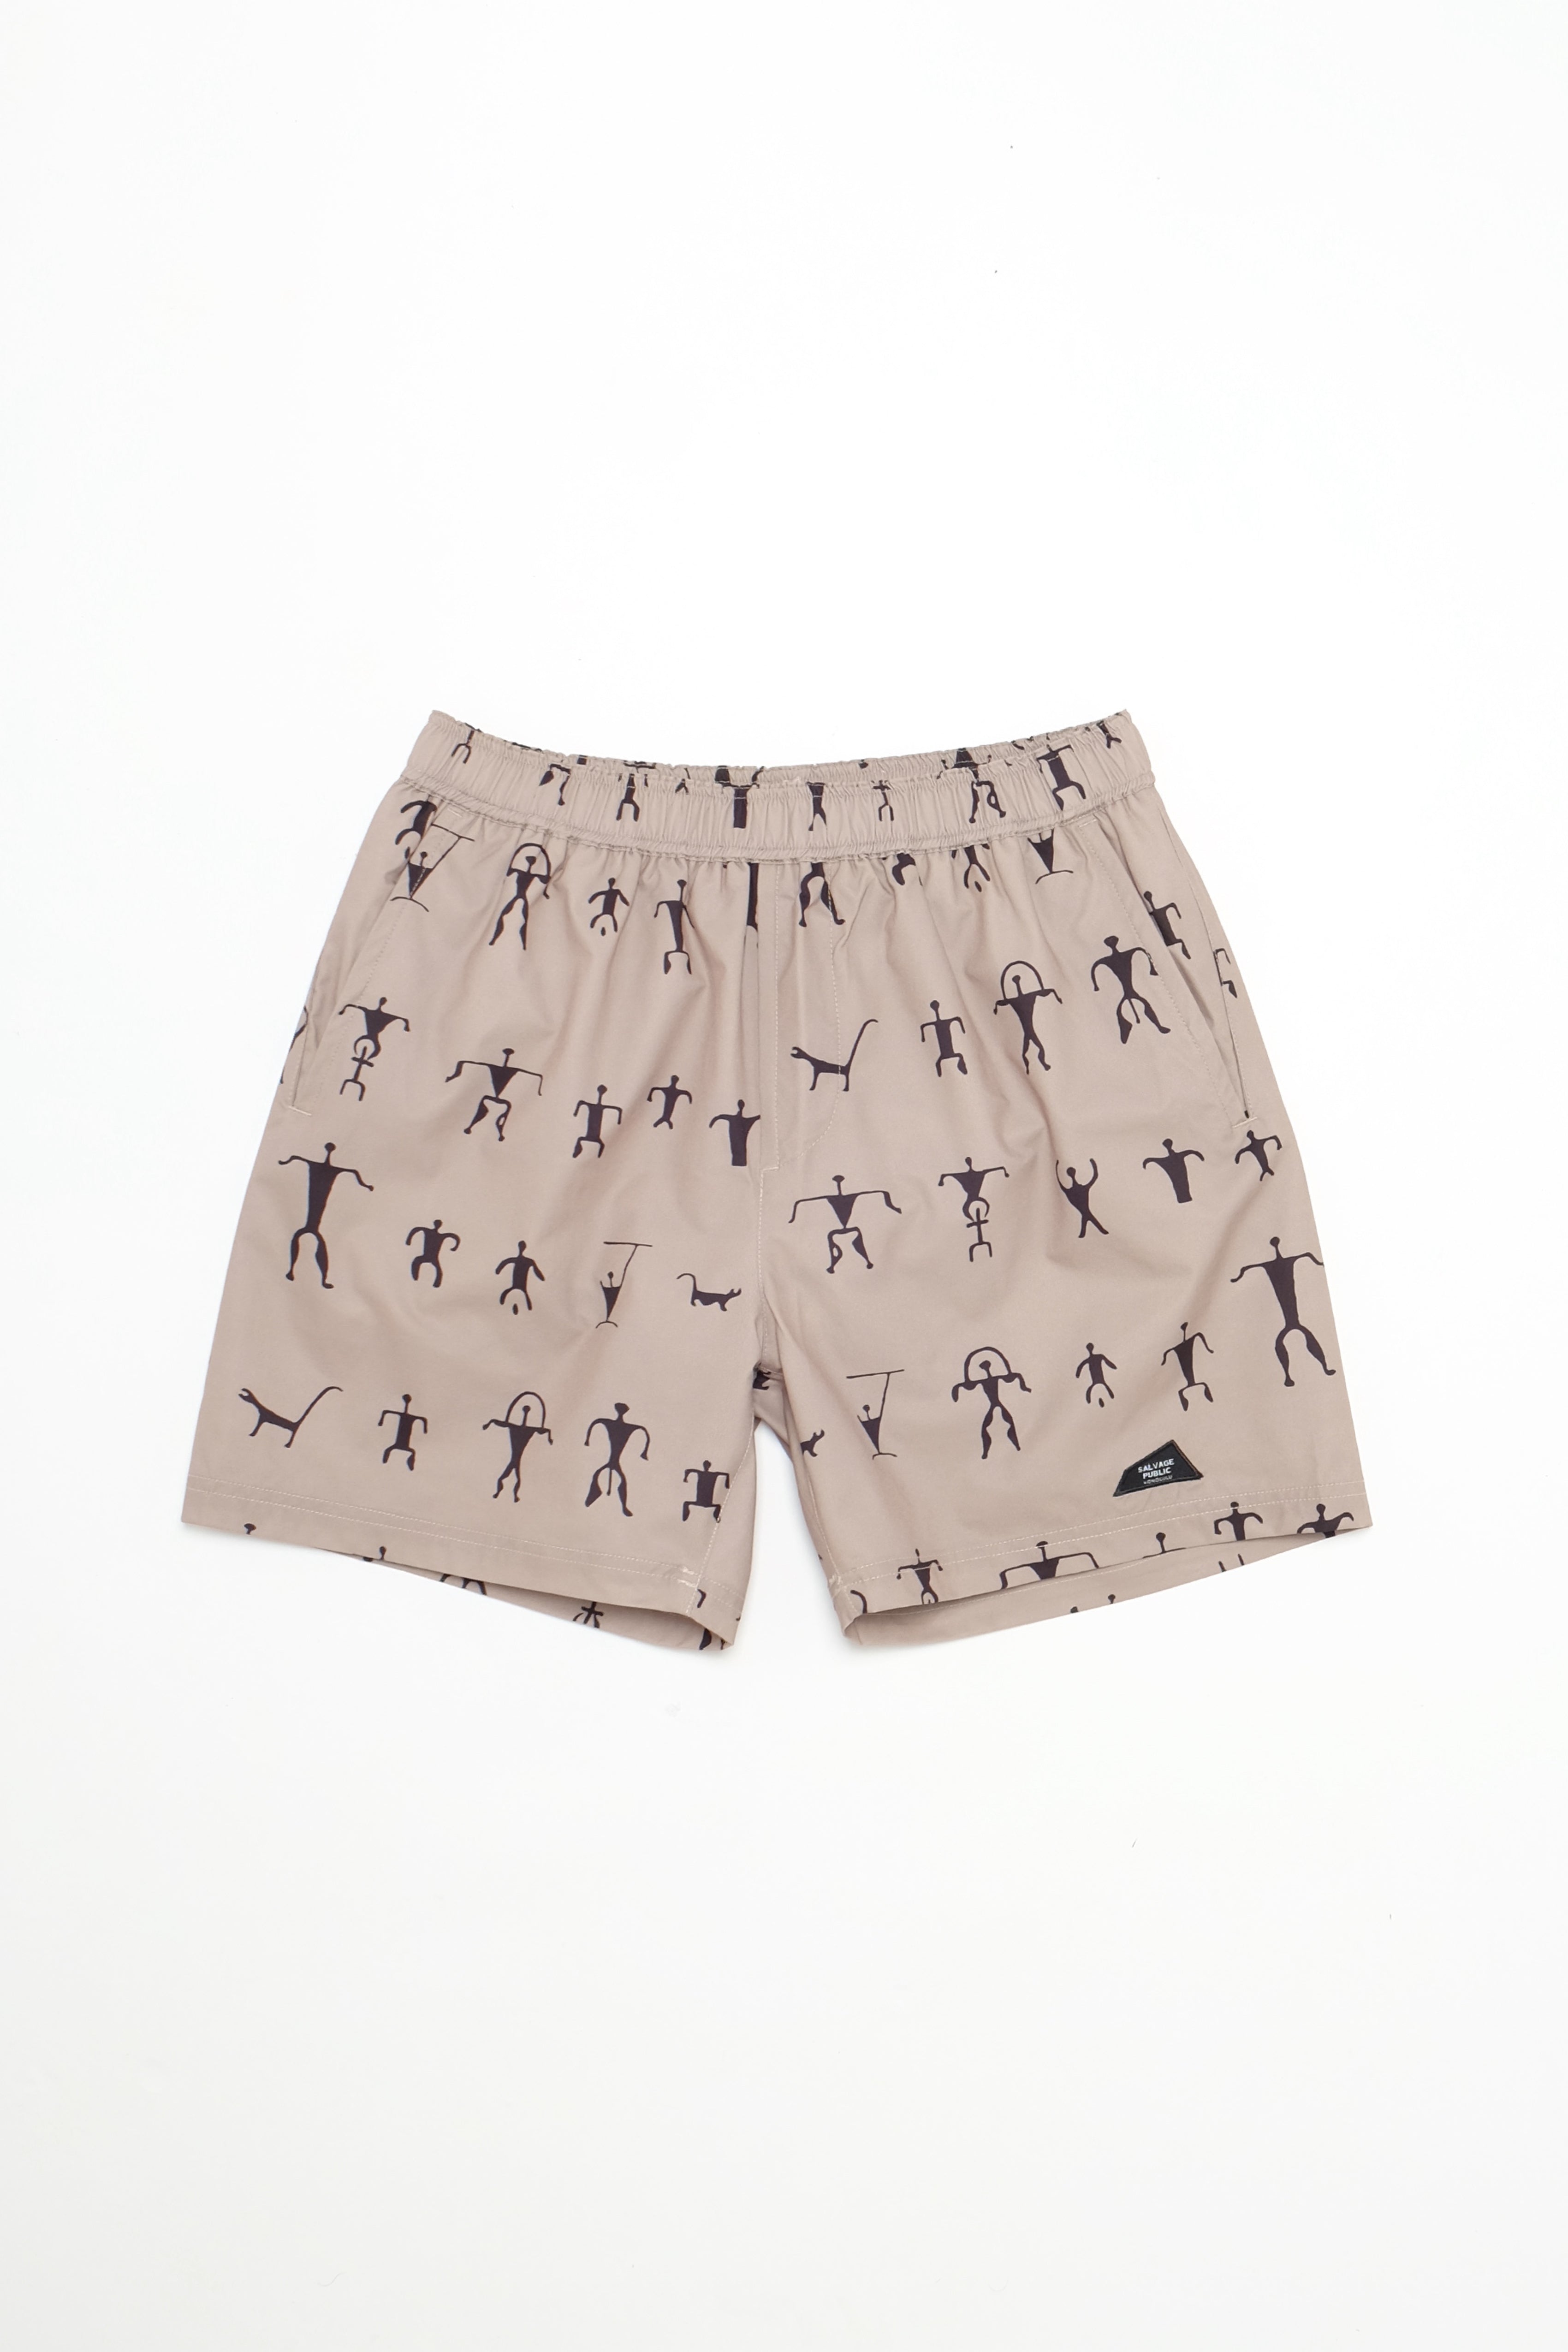 Swim Shorts - Hawaiian Petroglyph - Greige